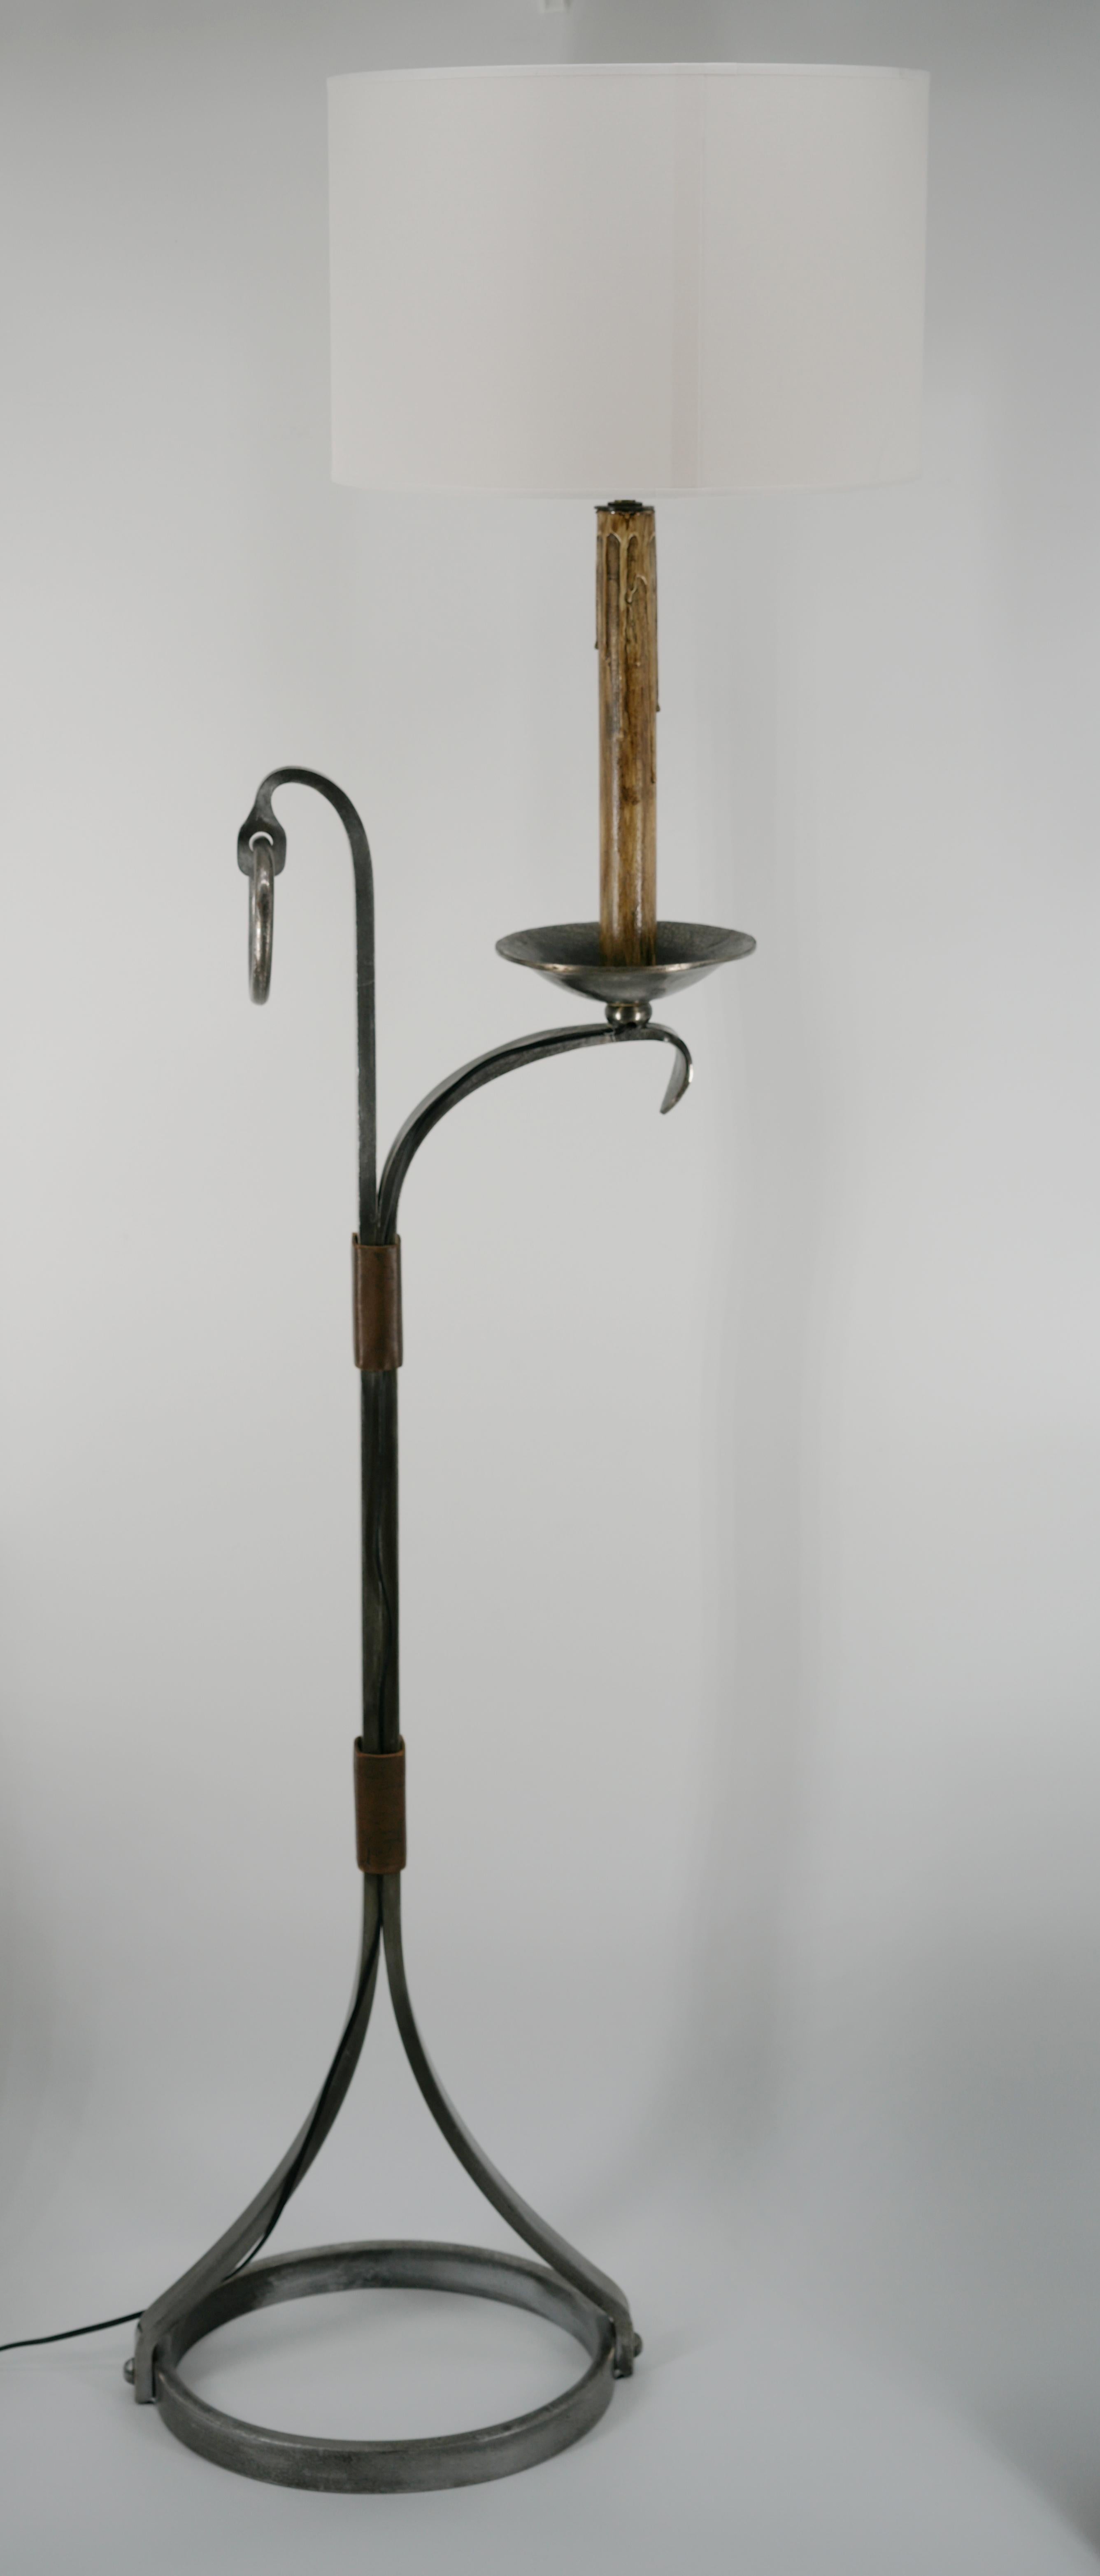 Jean-Pierre Ryckaert Midcentury Floor Lamp, 1950 For Sale 1